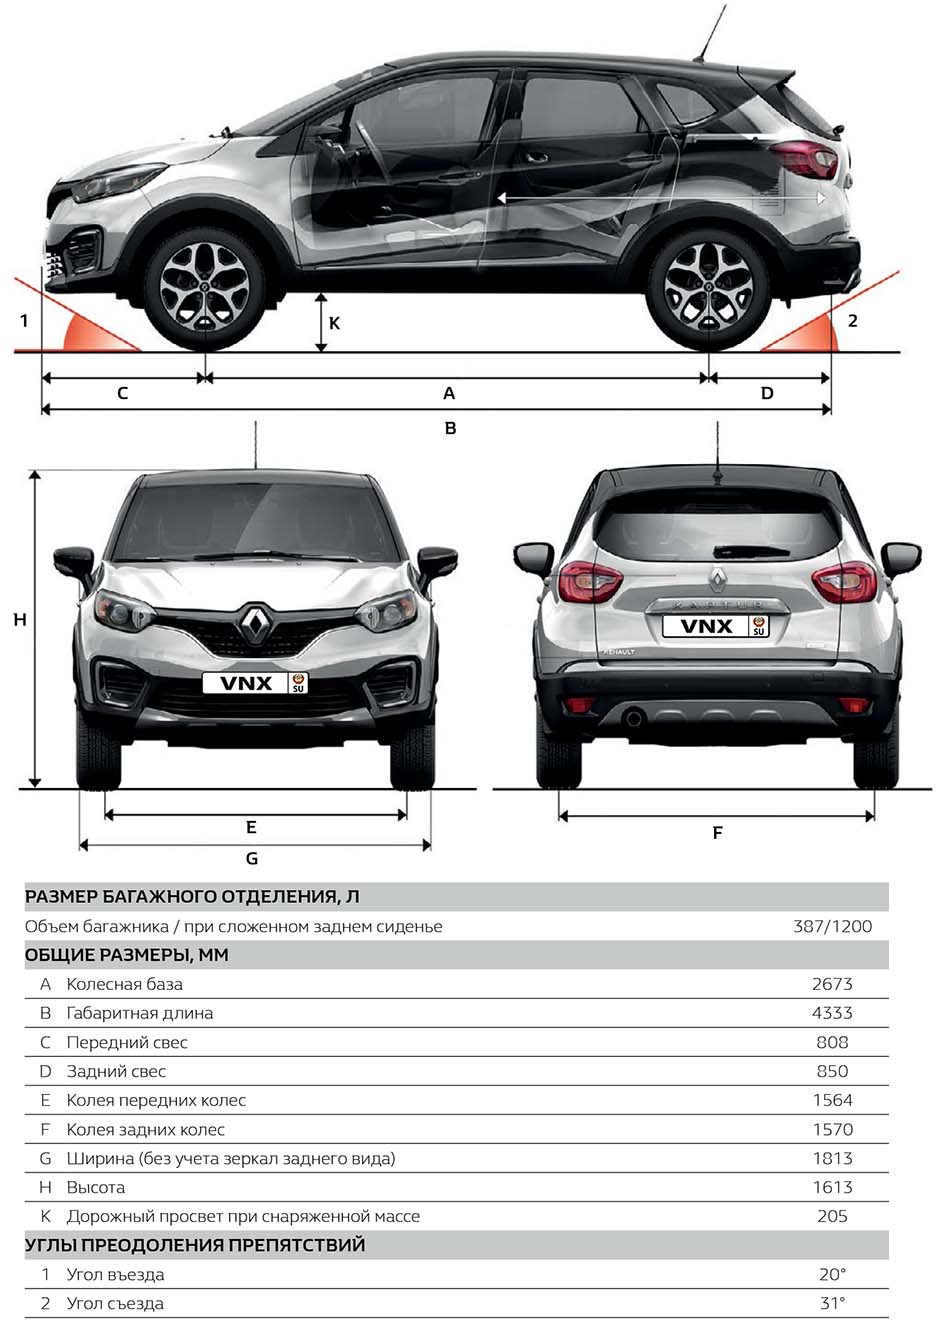 Габаритные размеры Рено Каптур 2016 (dimensions Renault Kaptur)